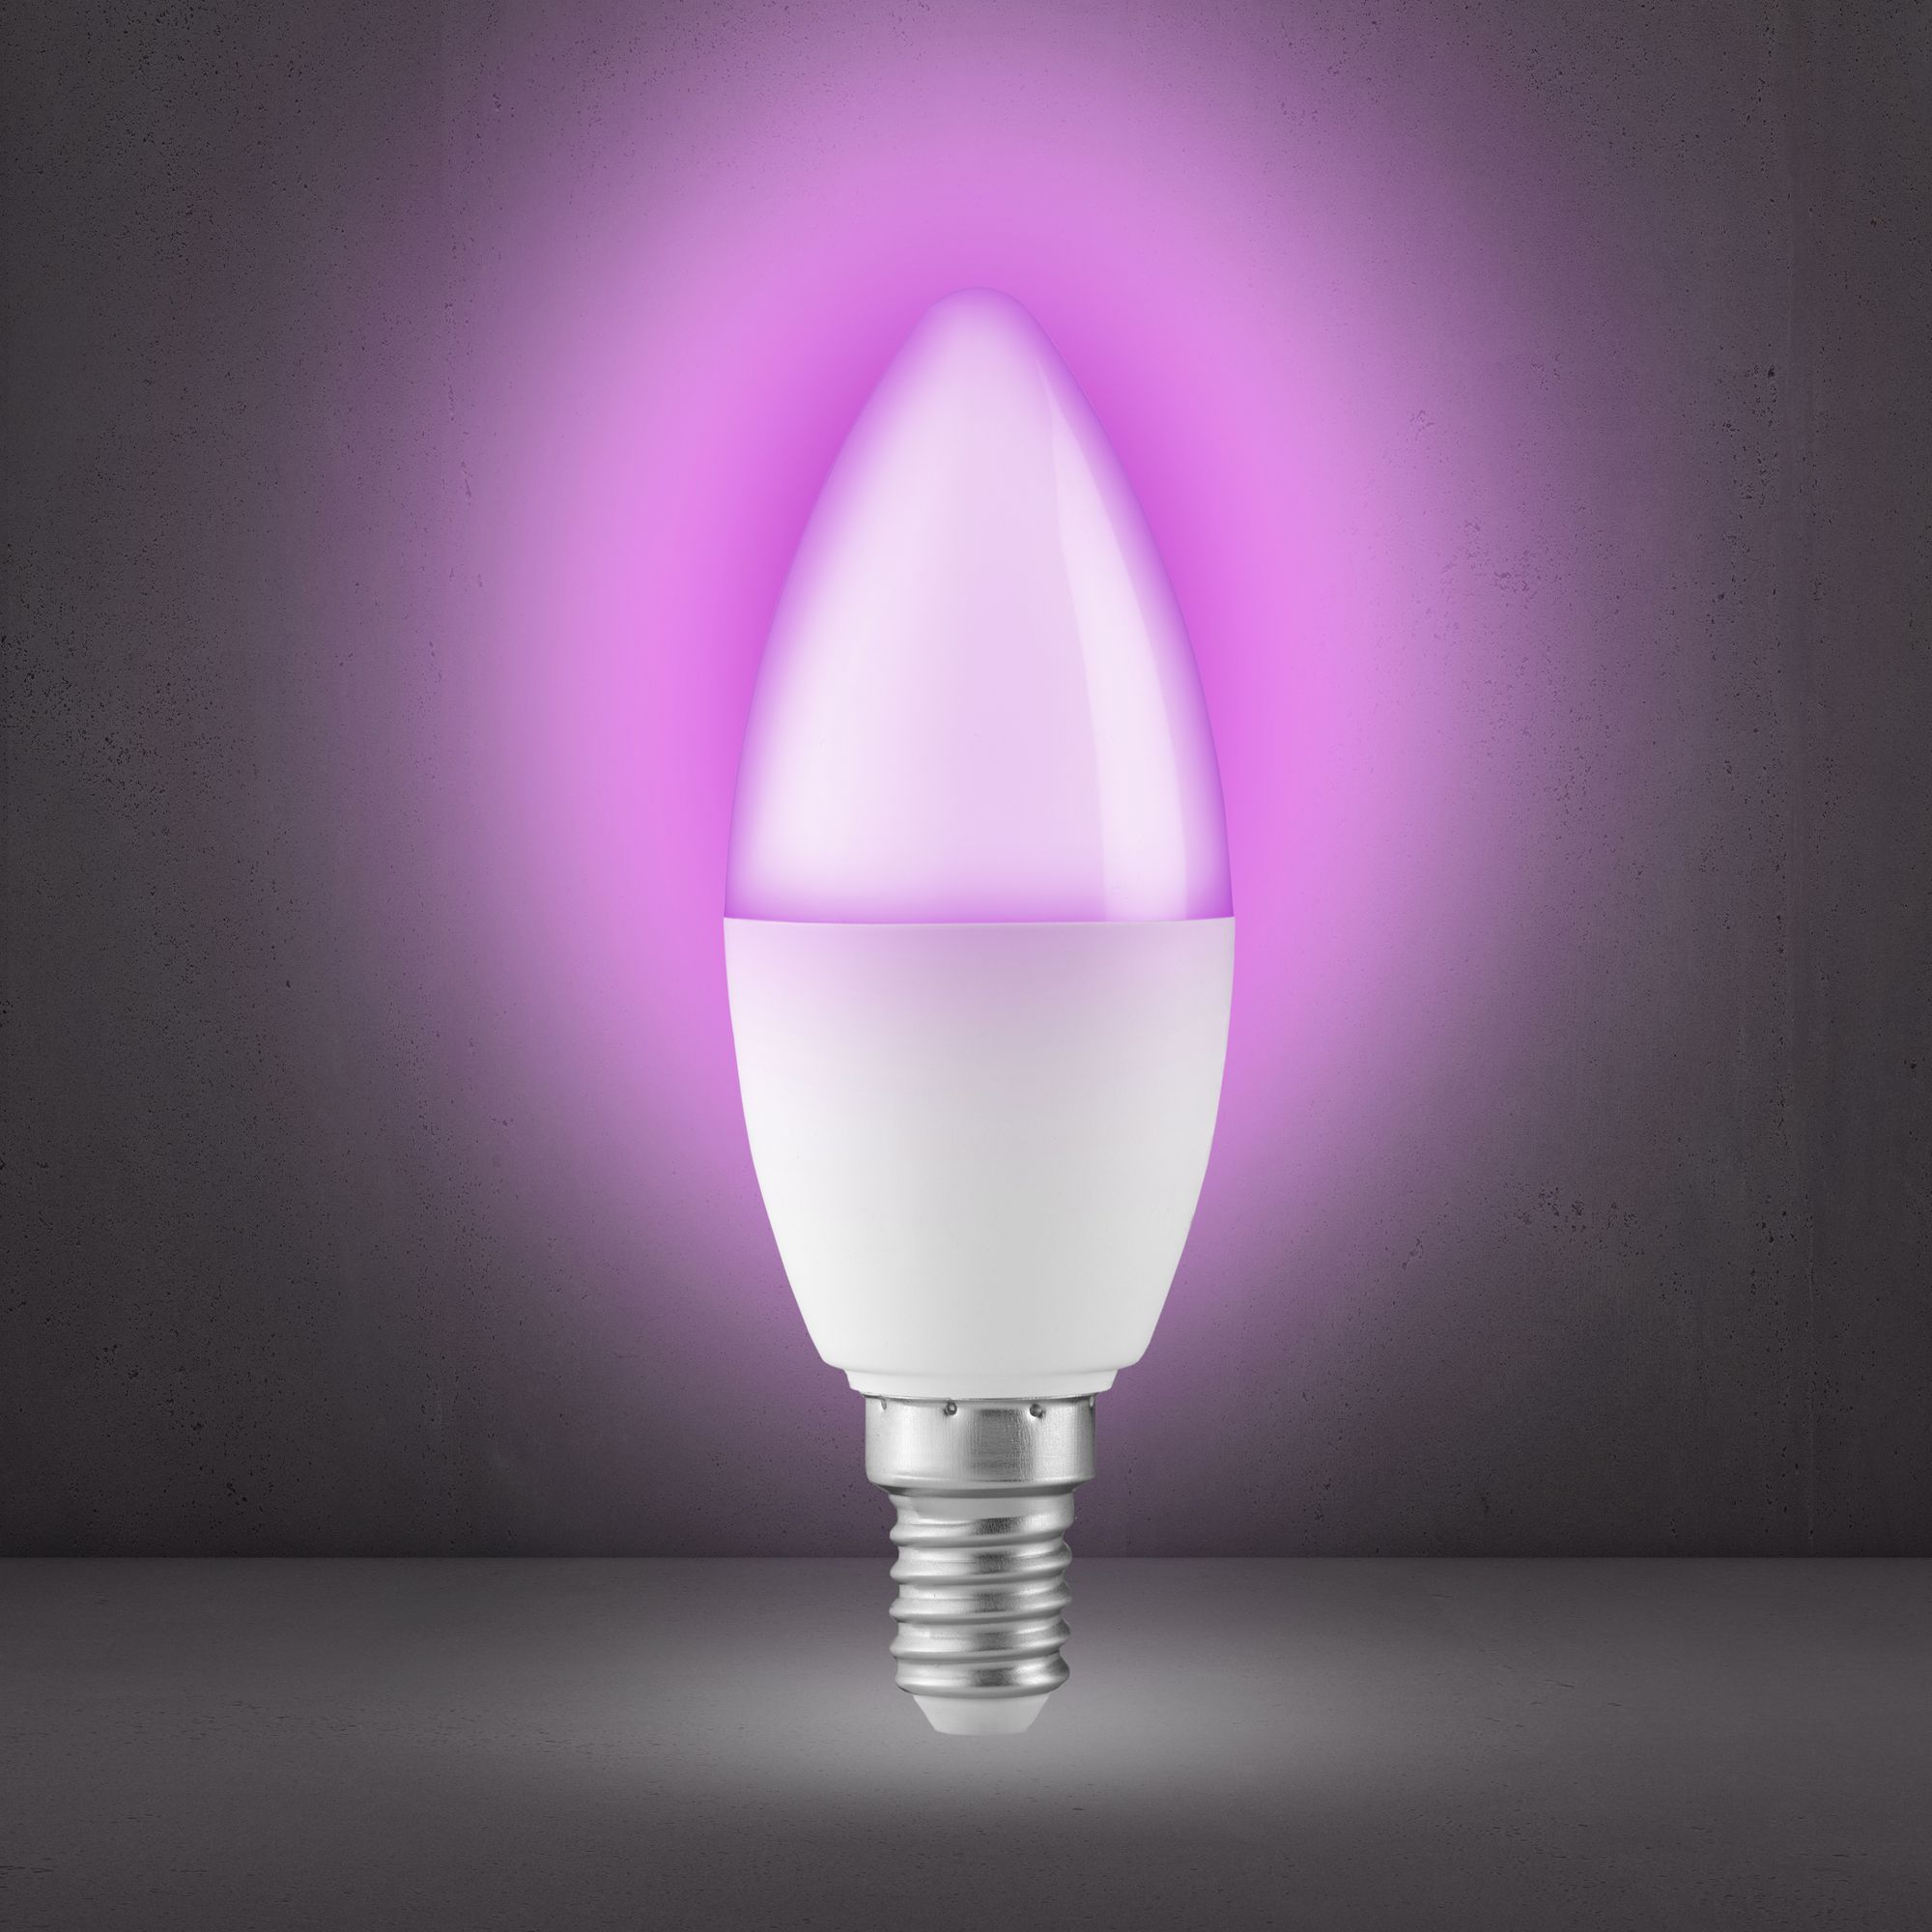 ALECTO SMARTLIGHT30 - smarte,mehrfarbige mit WLAN-LED-Glühlampe RGB E14-Sockel